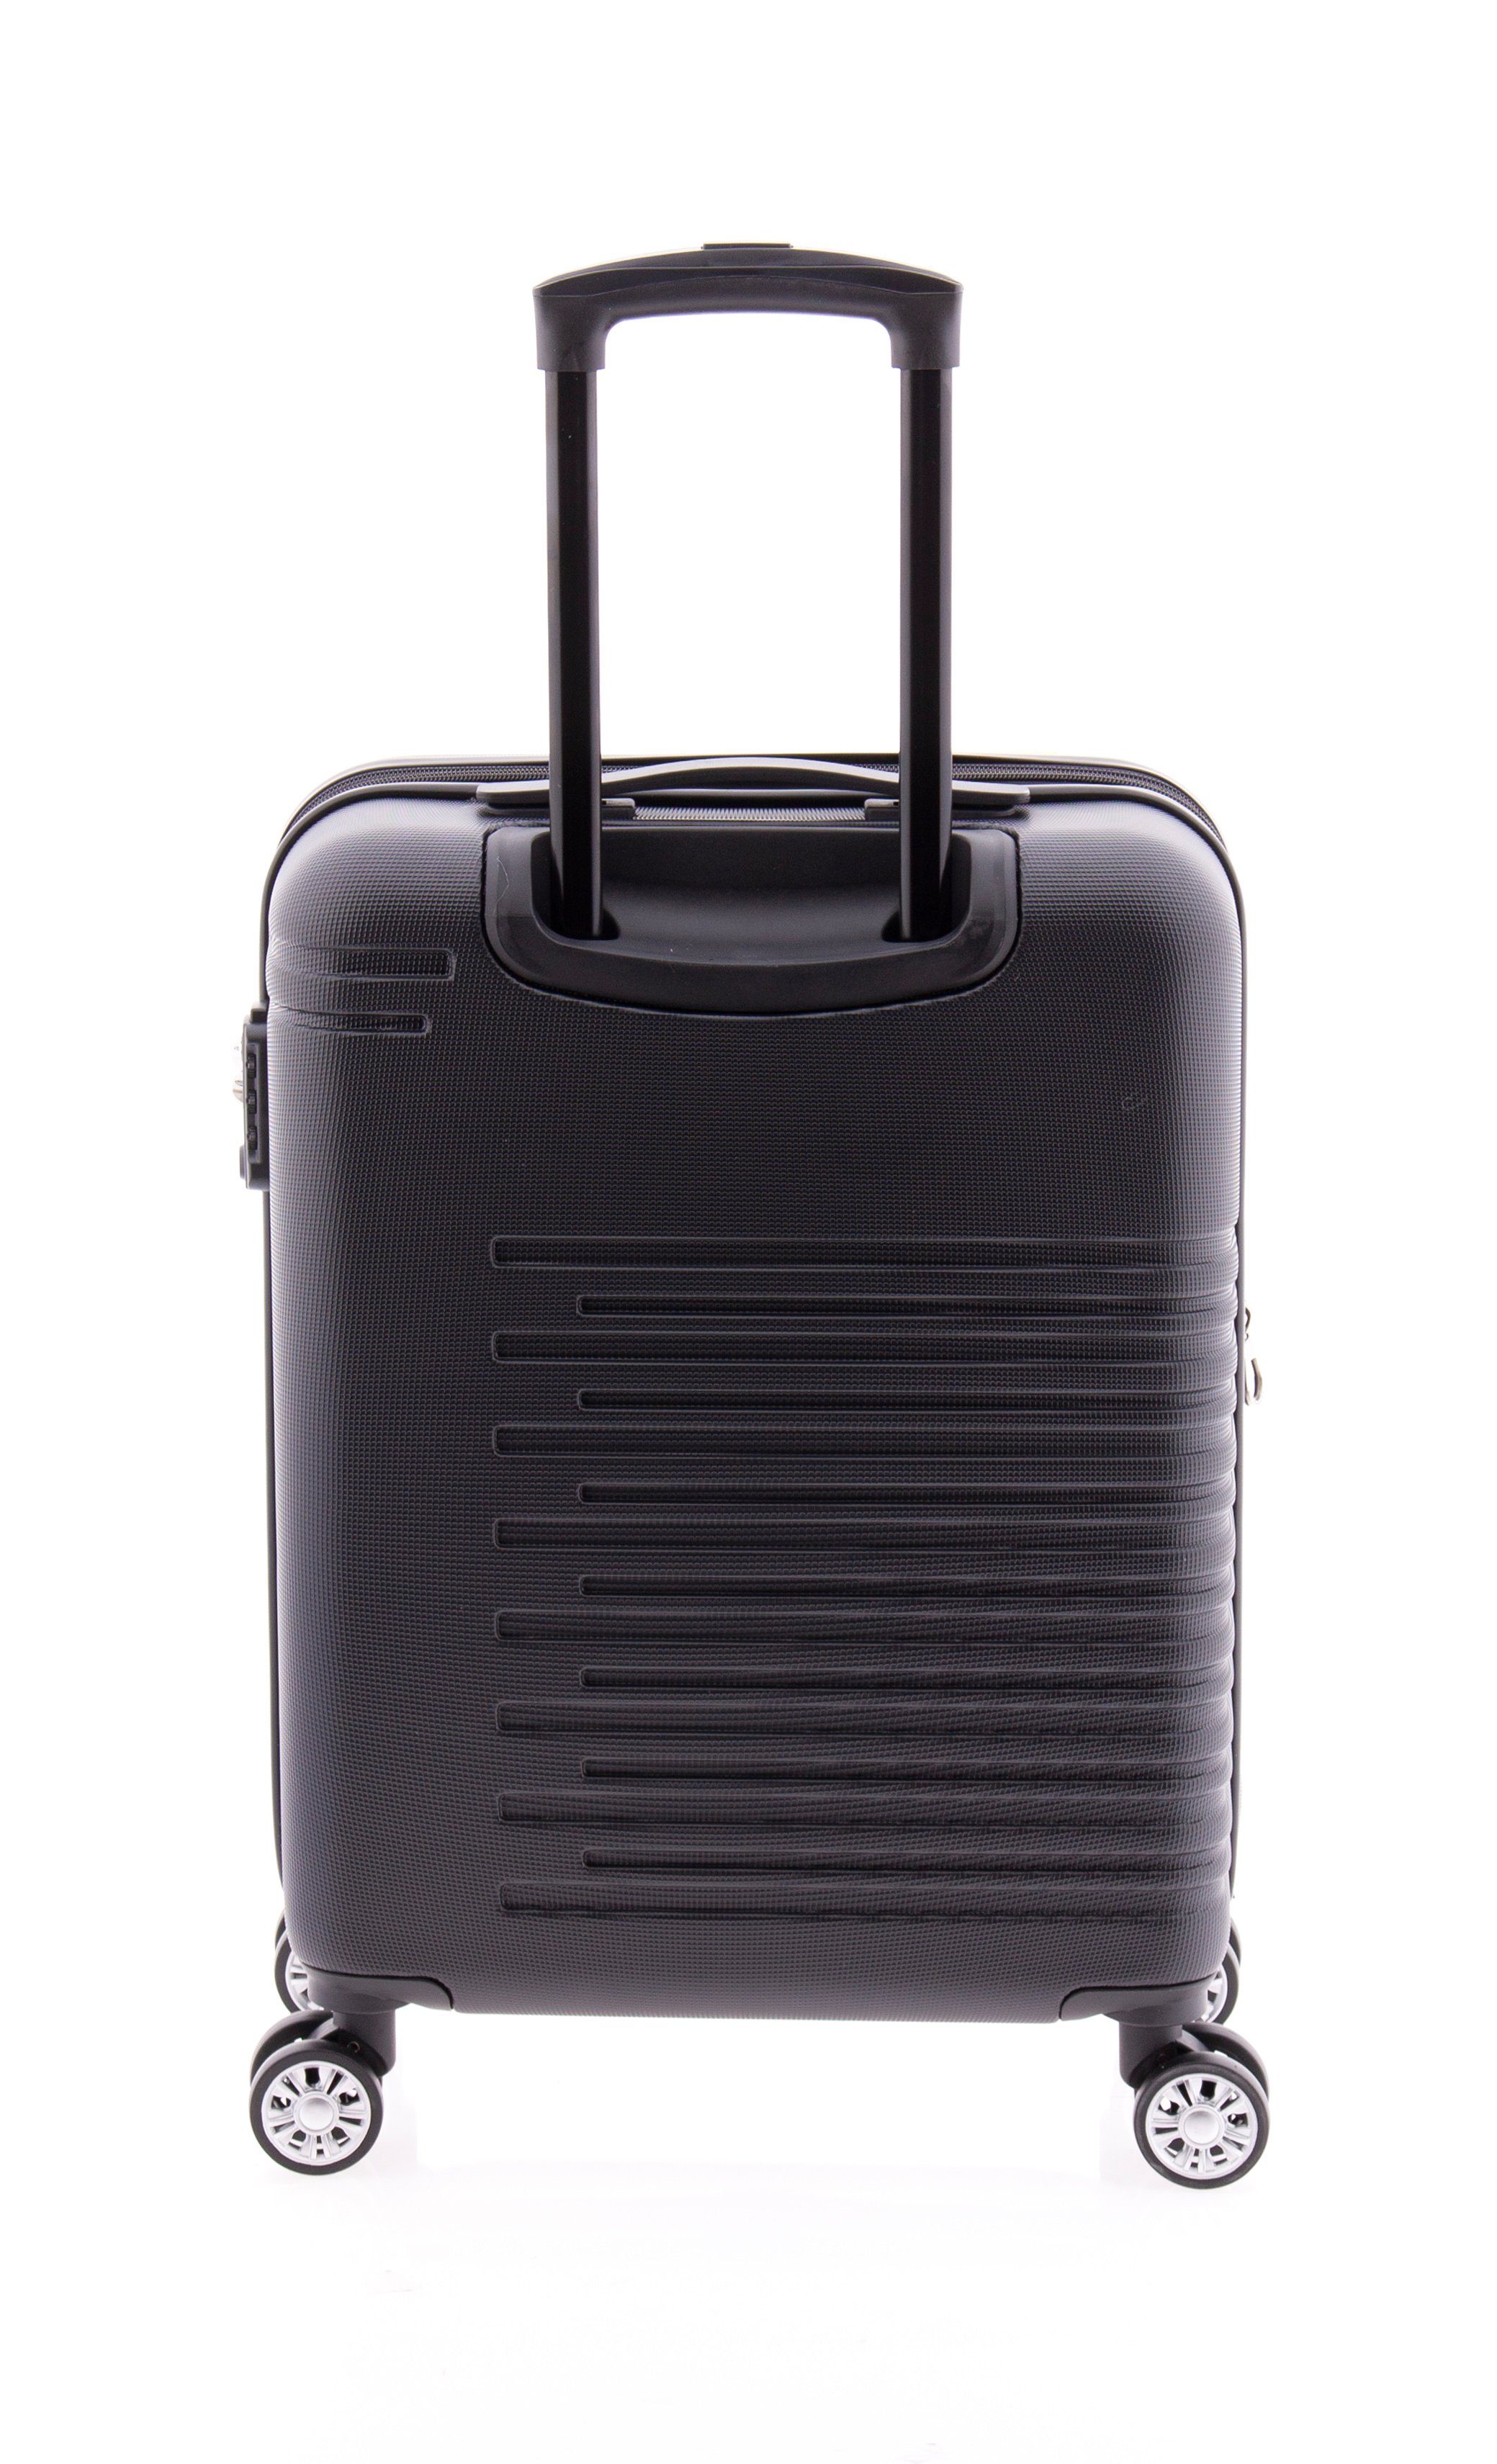 GLADIATOR Trolleyset - Koffer-Set div. schwarz Farben Dehnfalte, Rollen, cm, 67+55 2-tlg. 4 TSA